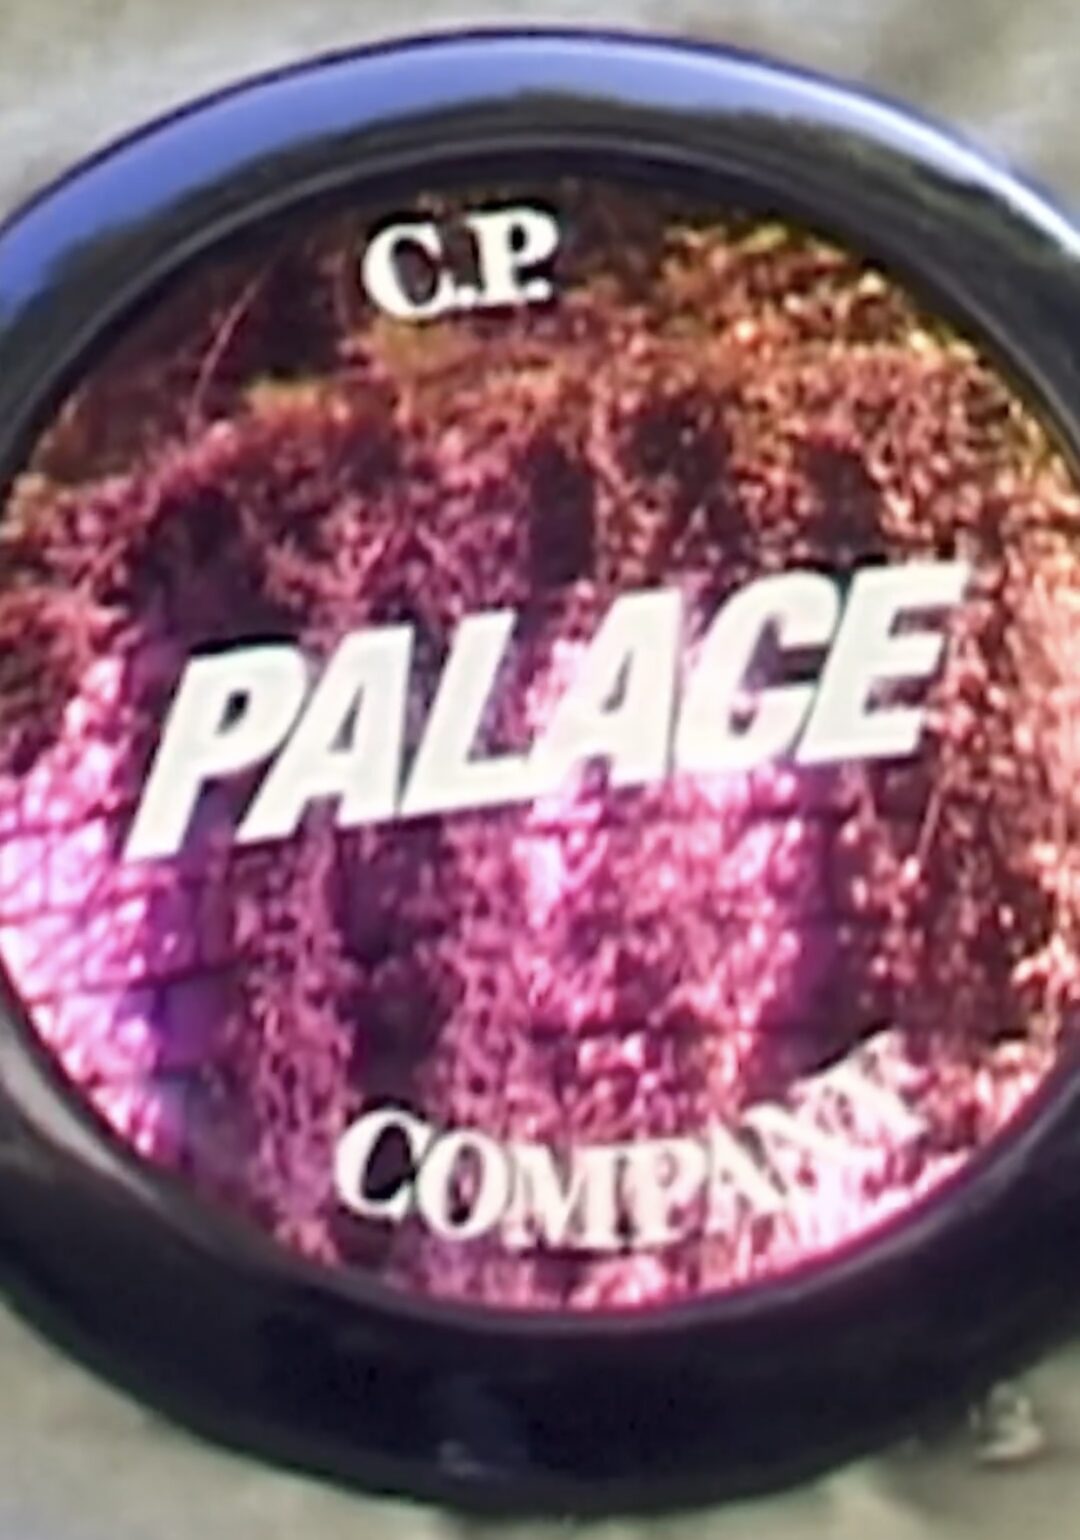 Palace Skateboards x C.P Company 2023年 コラボレーションが12/9 発売予定 (パレス スケートボード シーピー カンパニー)